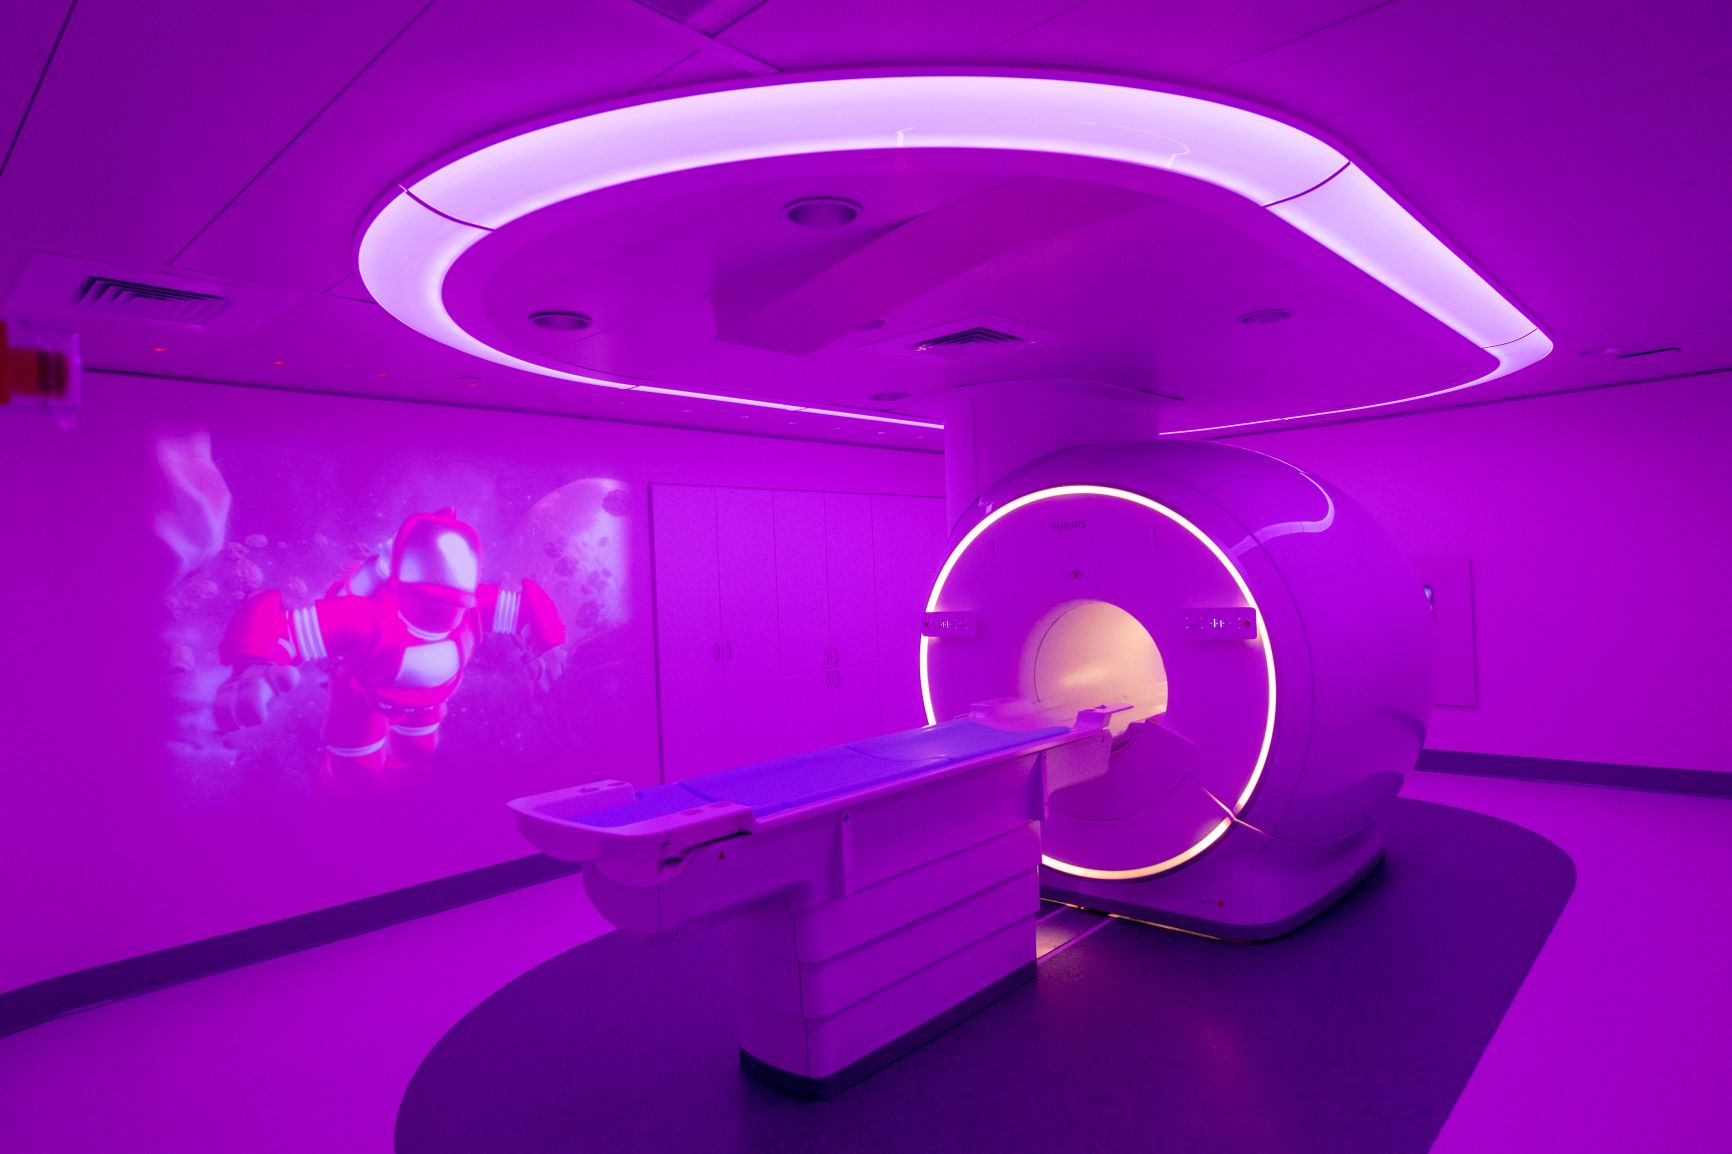 Ambient MRI